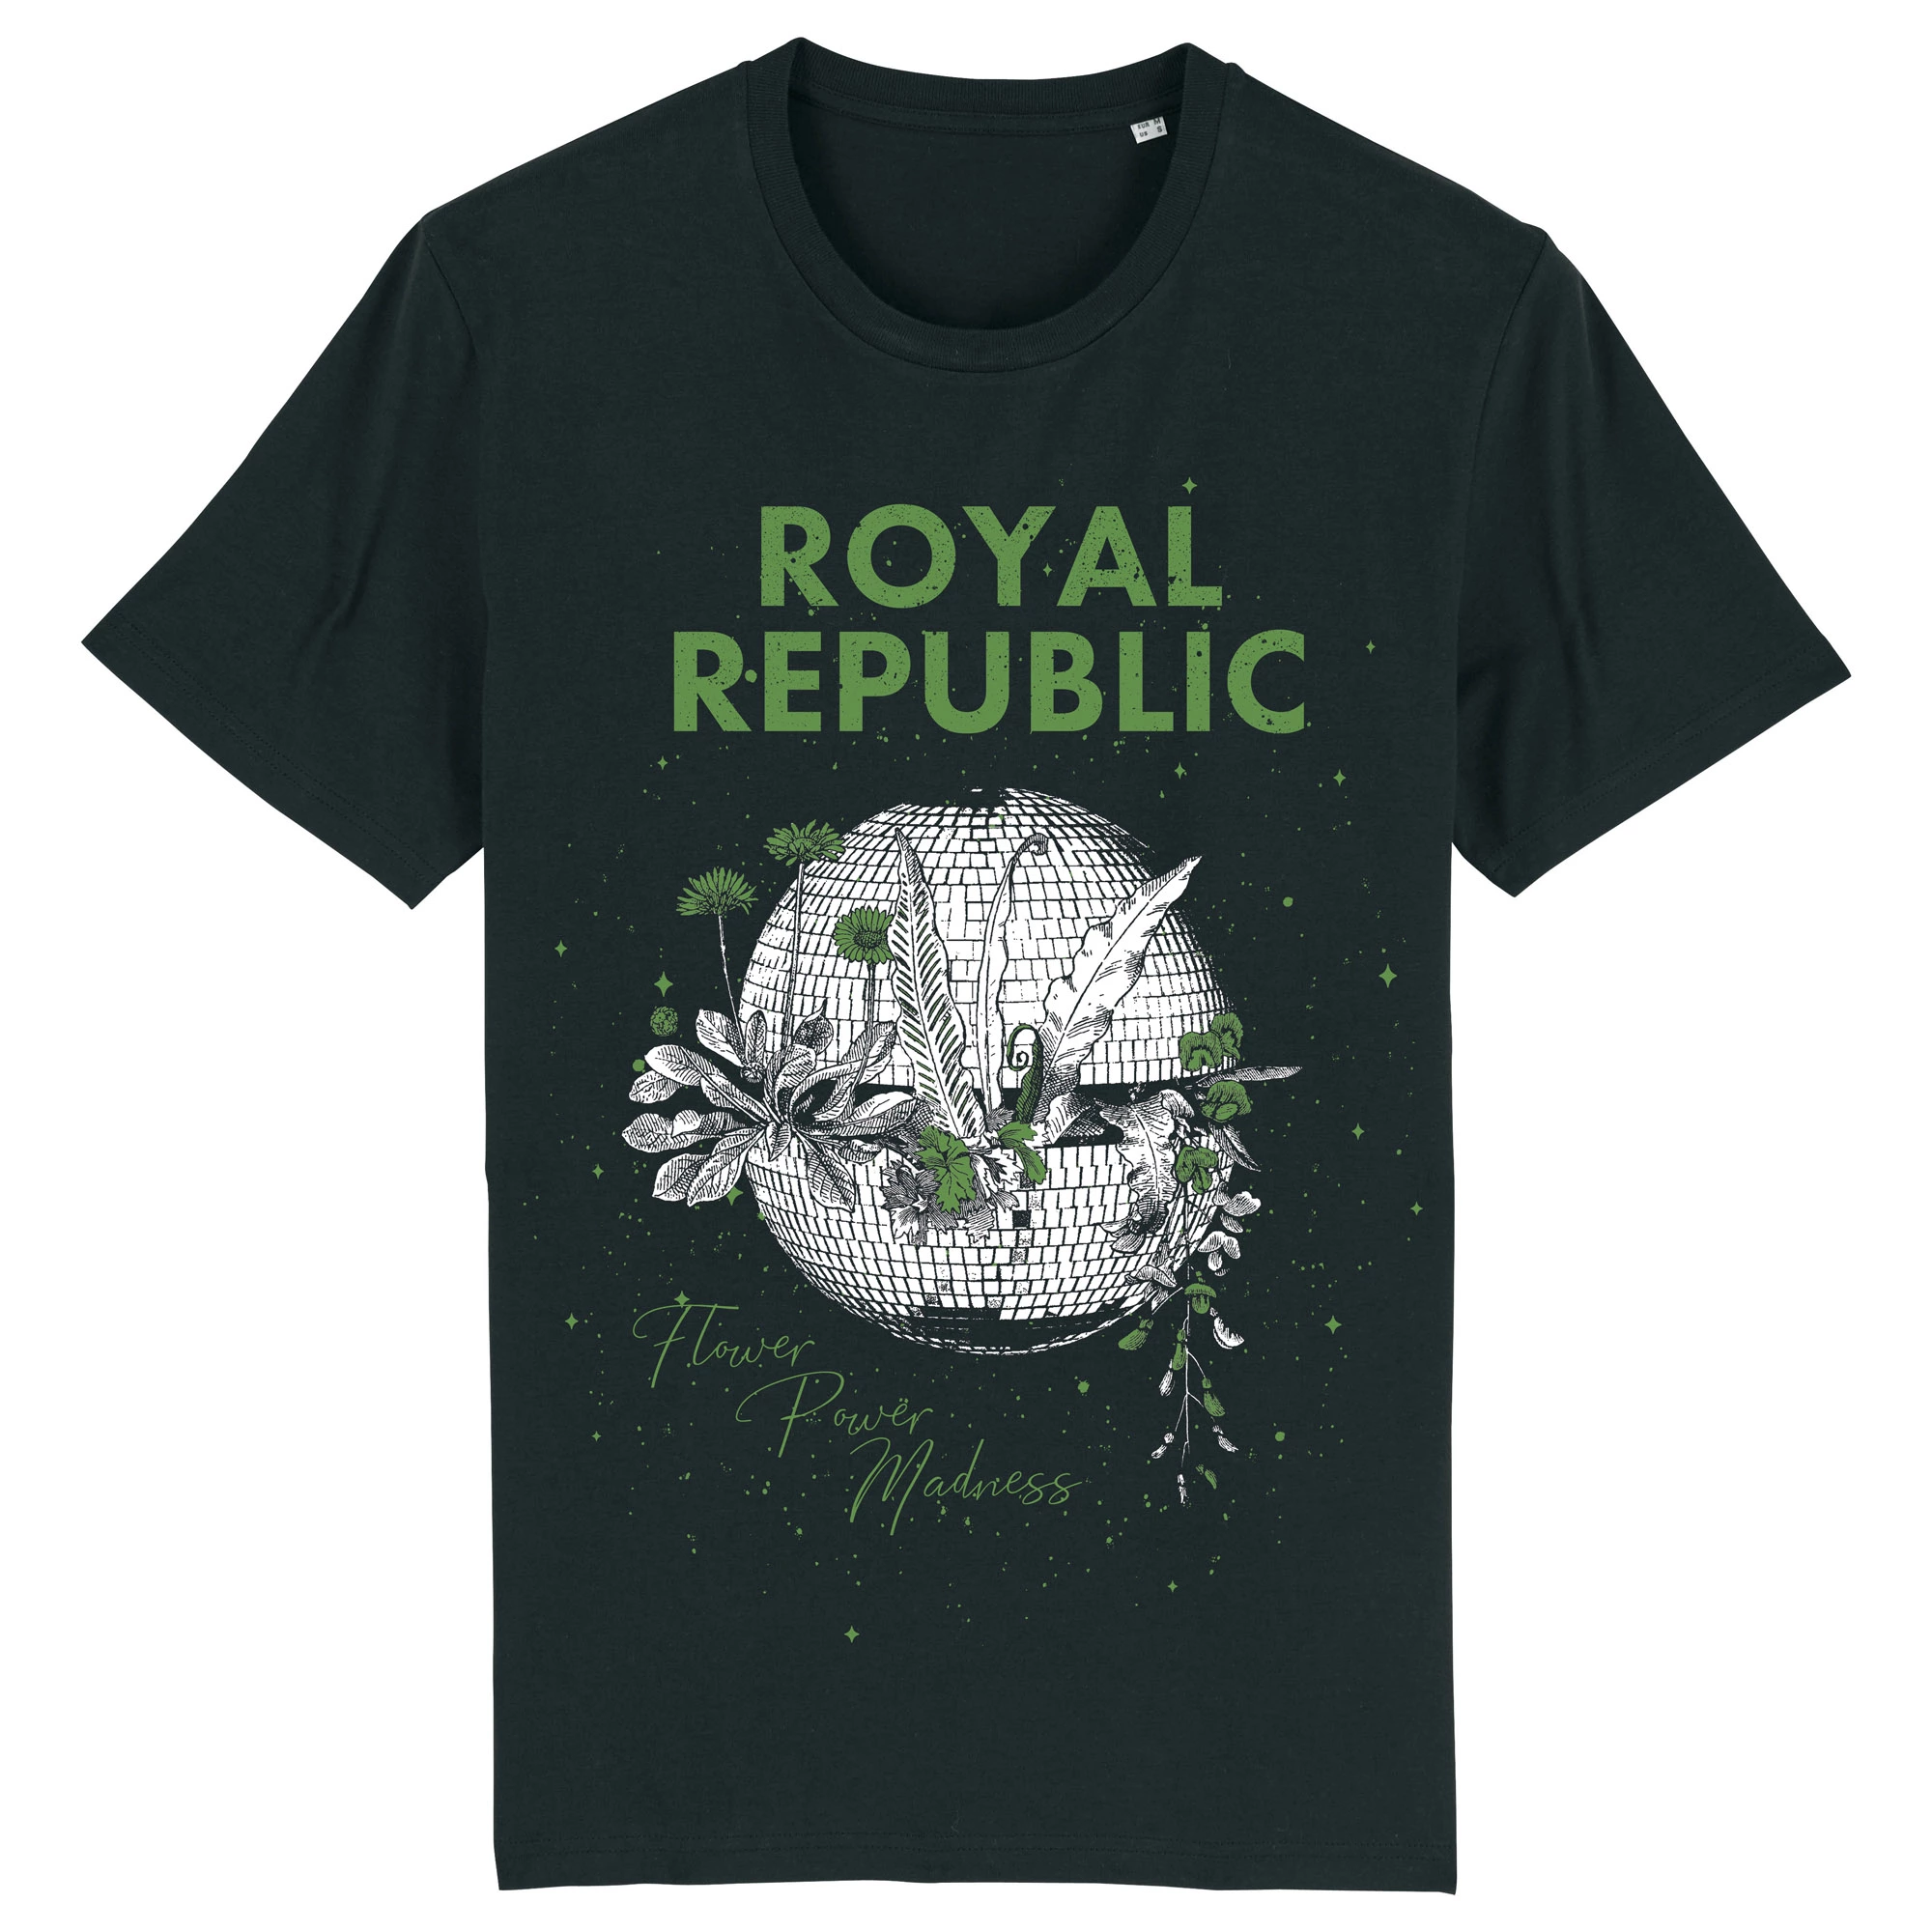 ROYAL REPUBLIC - Flower Power Madness  [T-SHIRT]